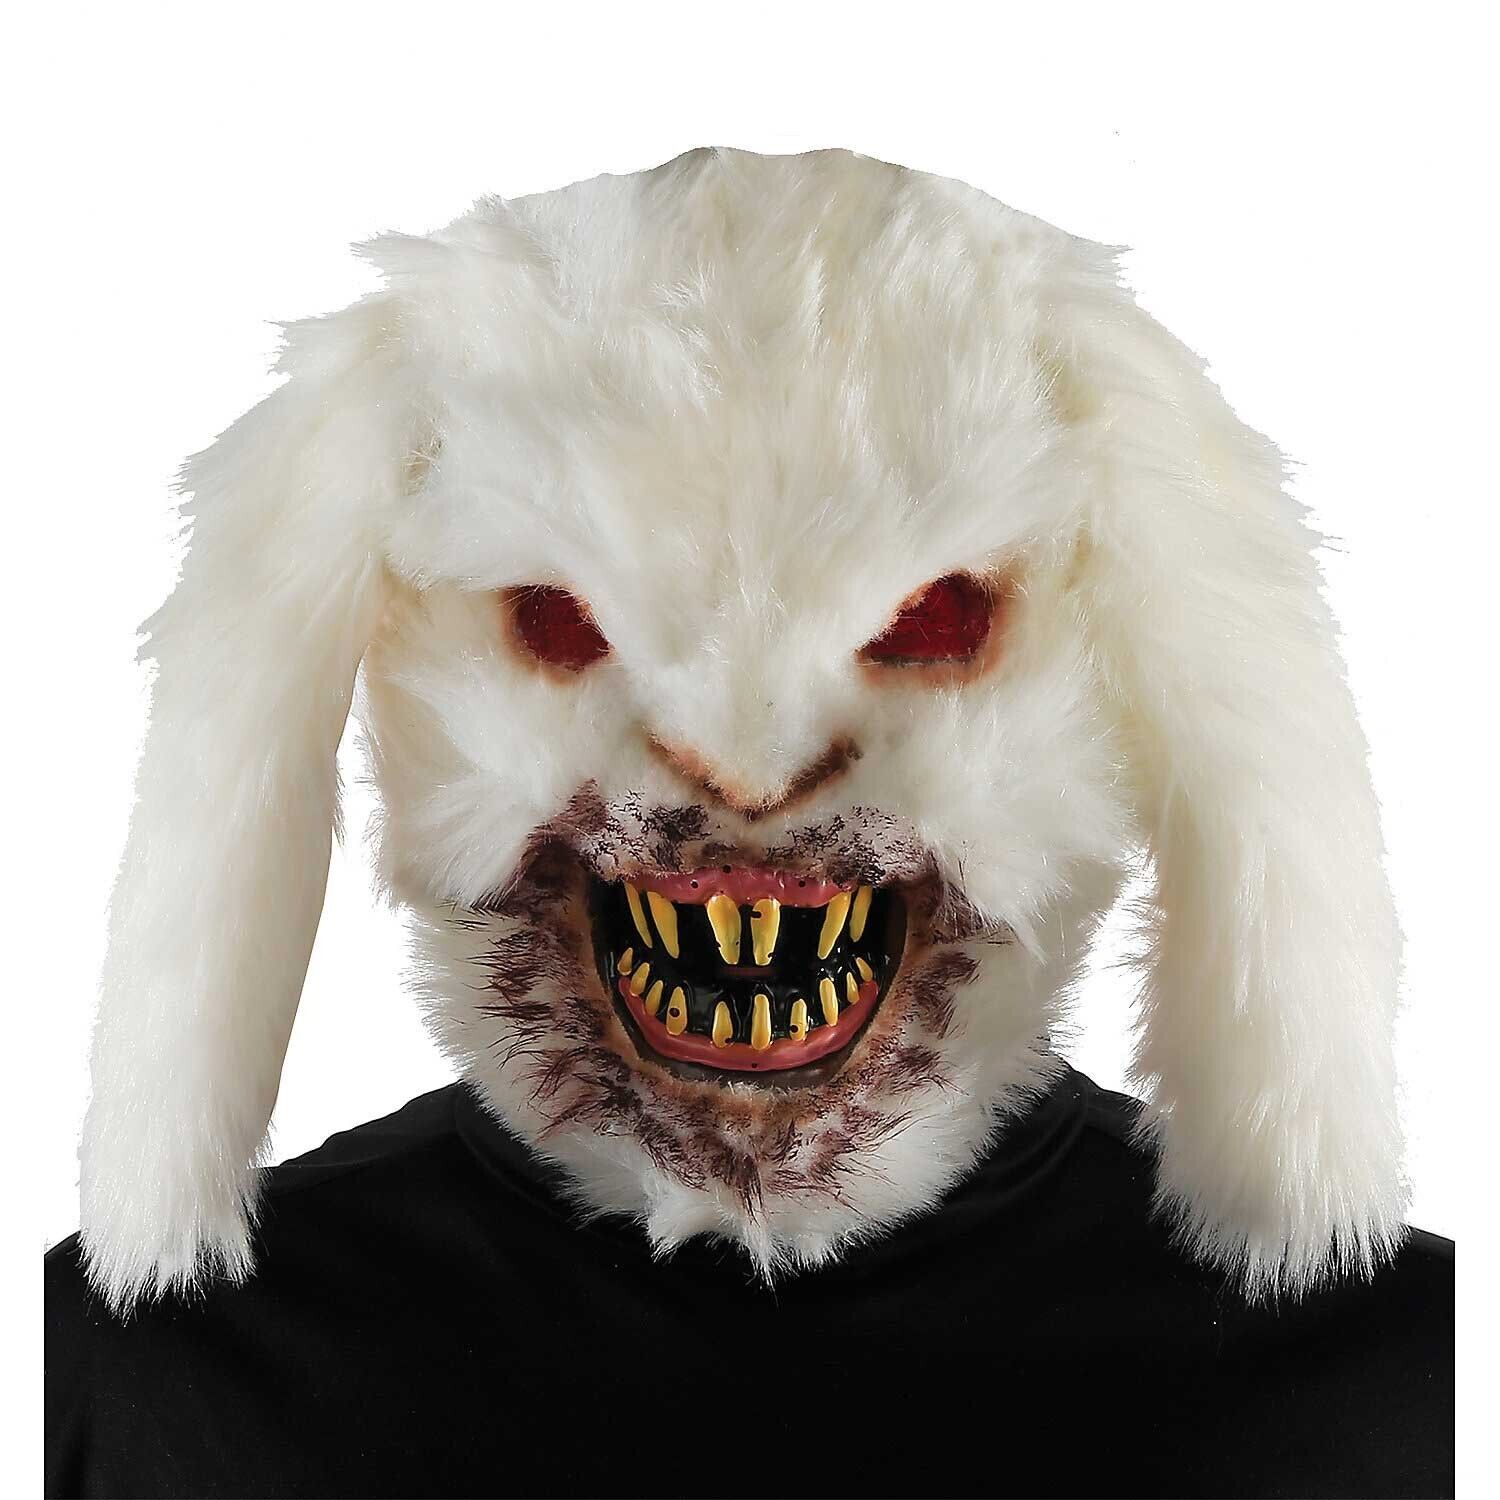 Creepy Horror RABID BUNNY KILLER RABBIT MASK Halloween Monster Costume Accessory